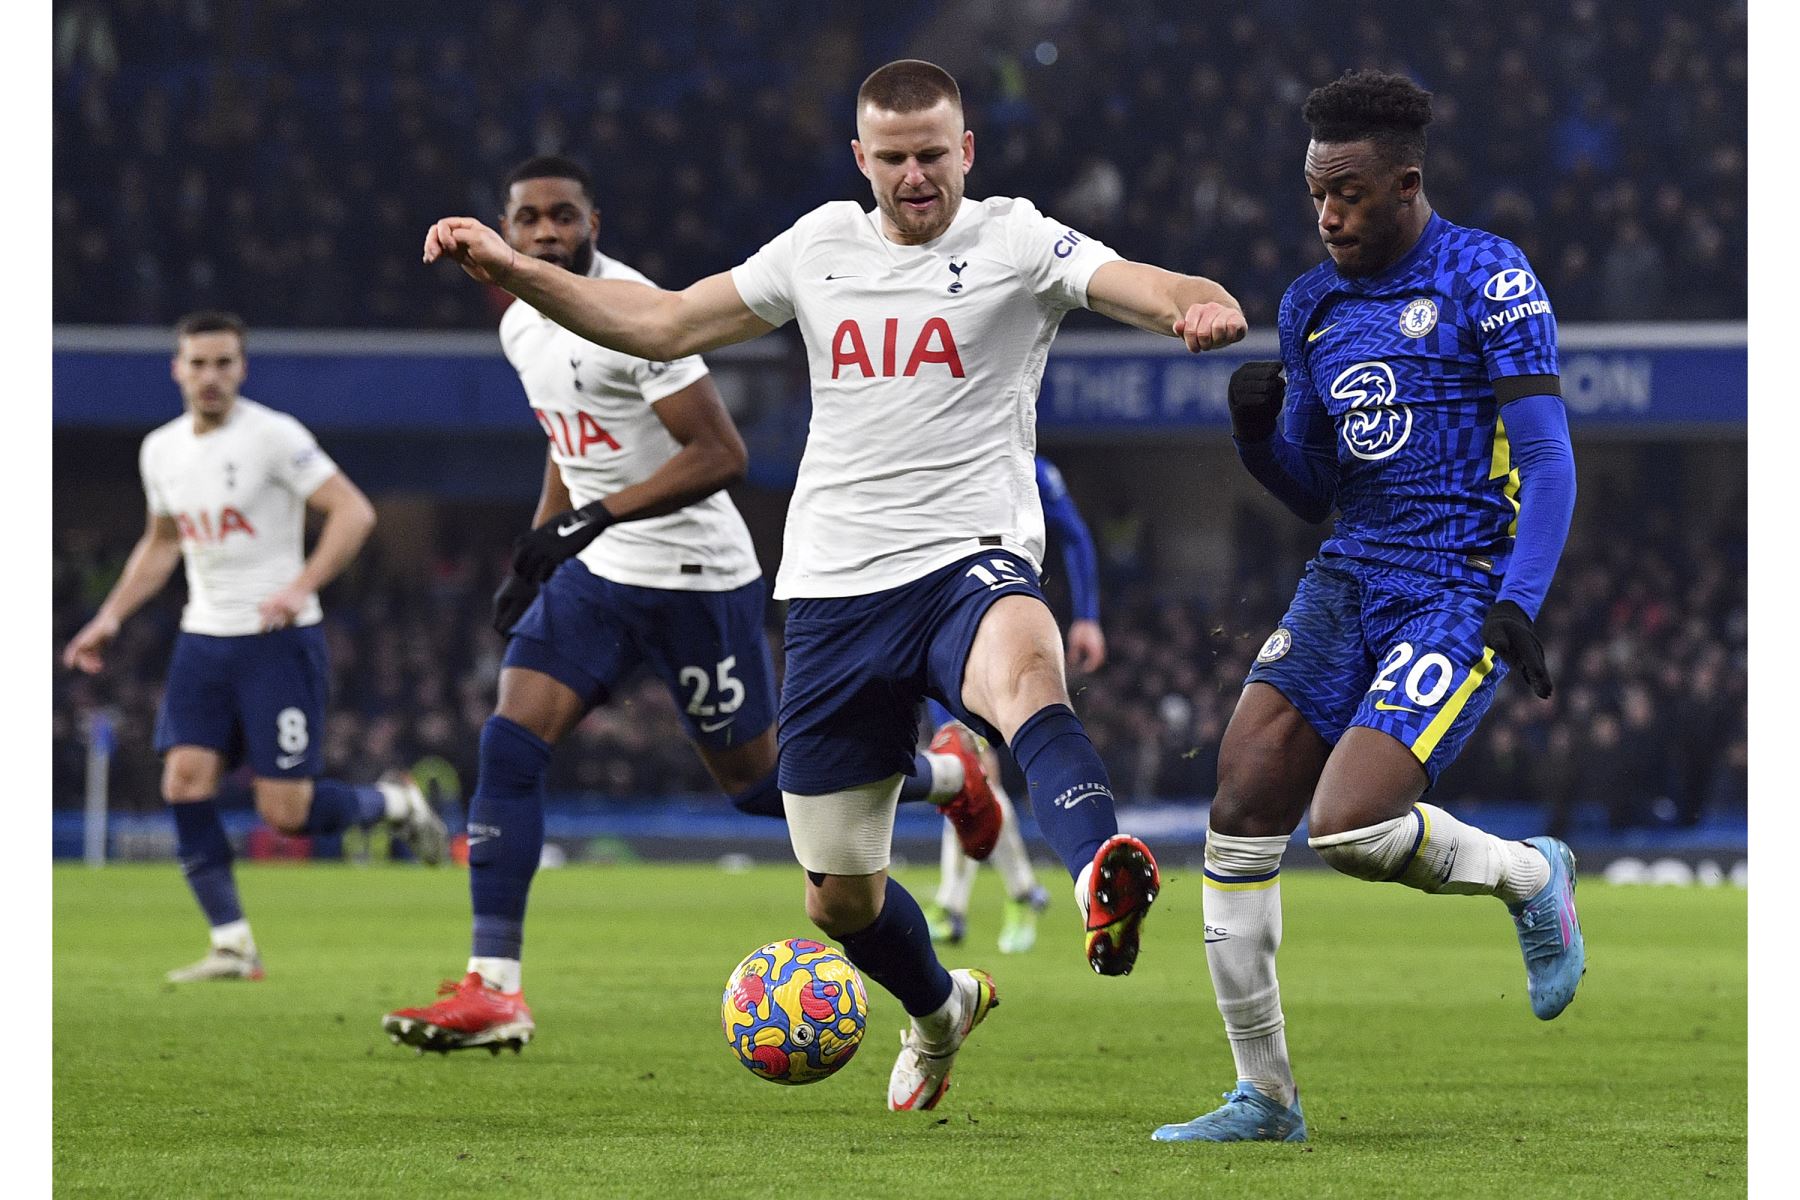 El defensor inglés del Tottenham Hotspur, Eric Dier, disputa el balón con el mediocampista inglés del Chelsea, Callum Hudson-Odoi, durante el partido de la Premier League. Foto: AFP